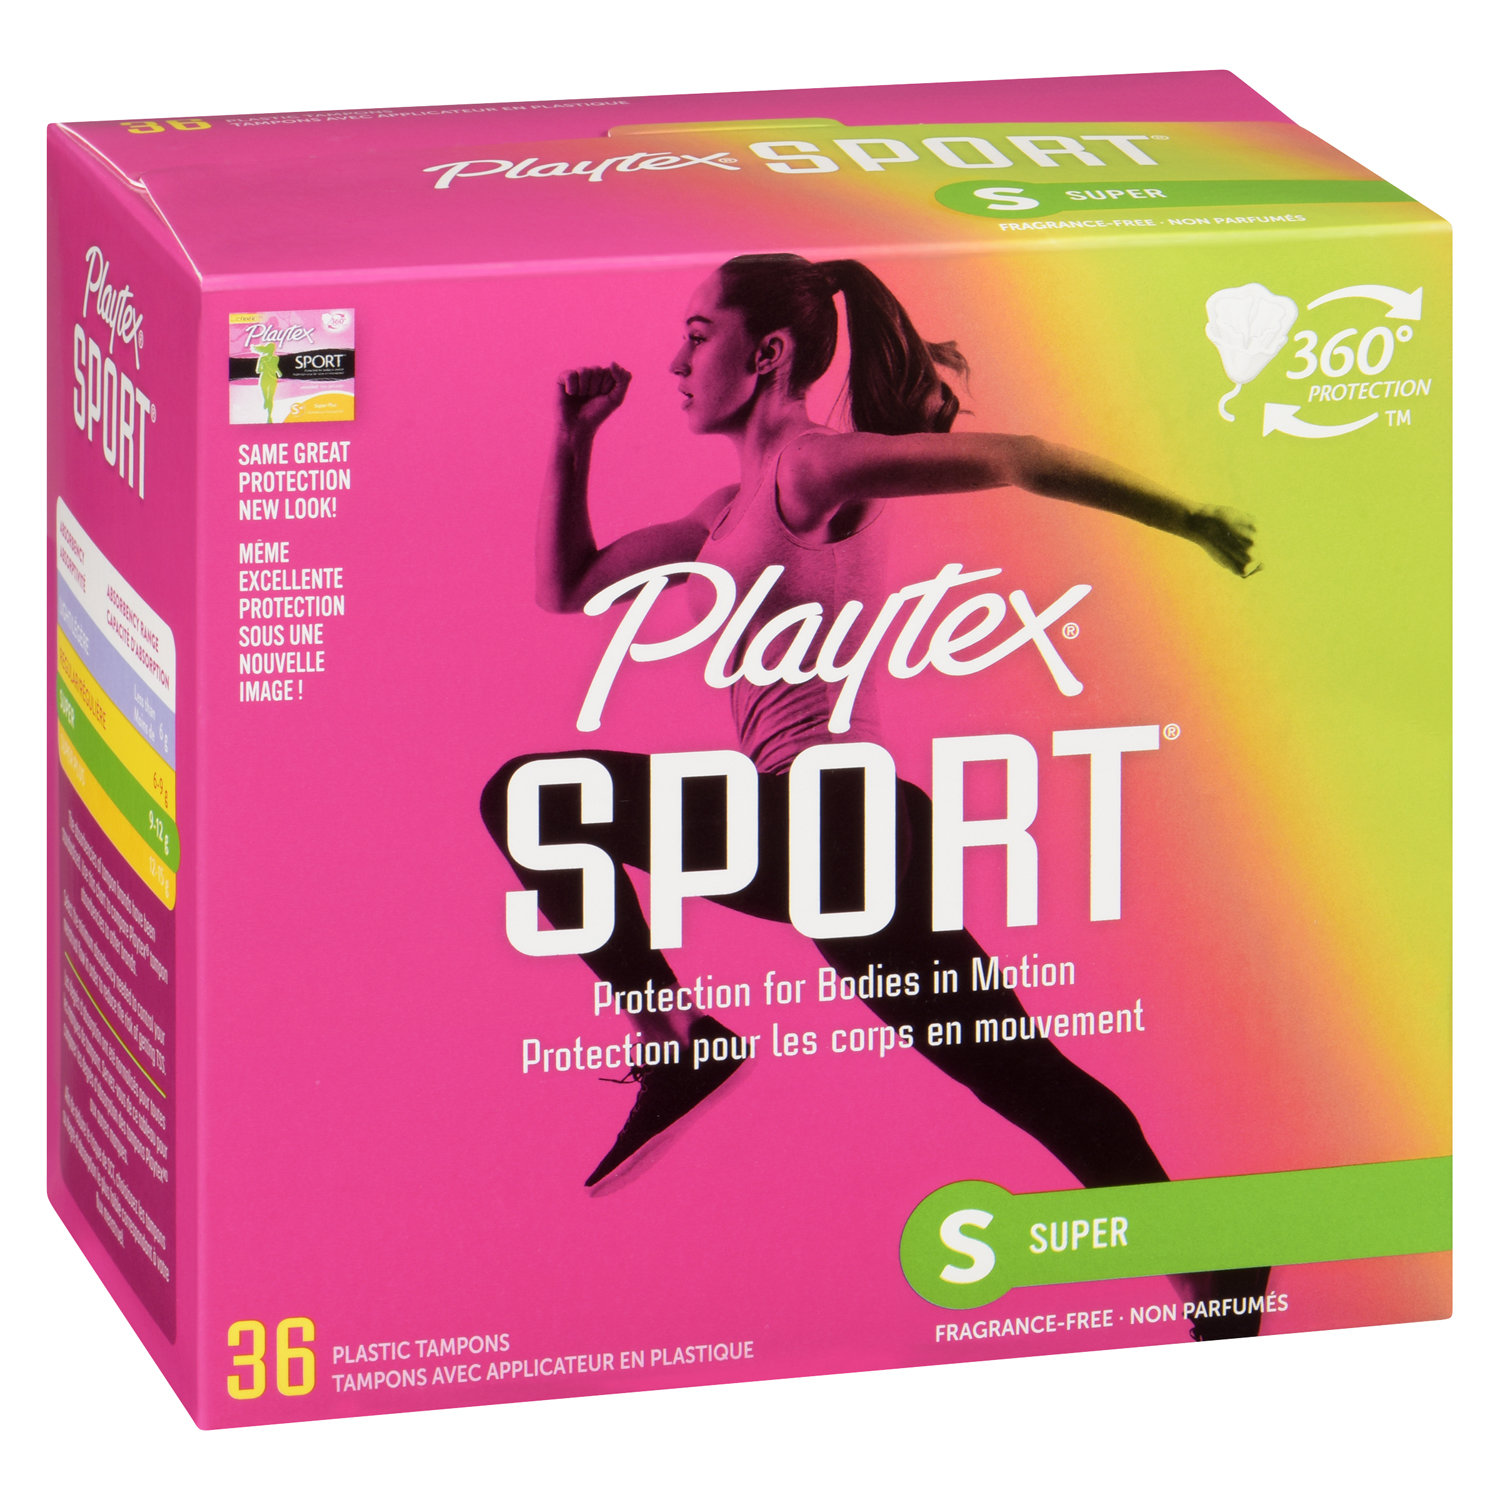 Playtex - Sport Tampons - Odor Shield Multi Pack, Super - Save-On-Foods